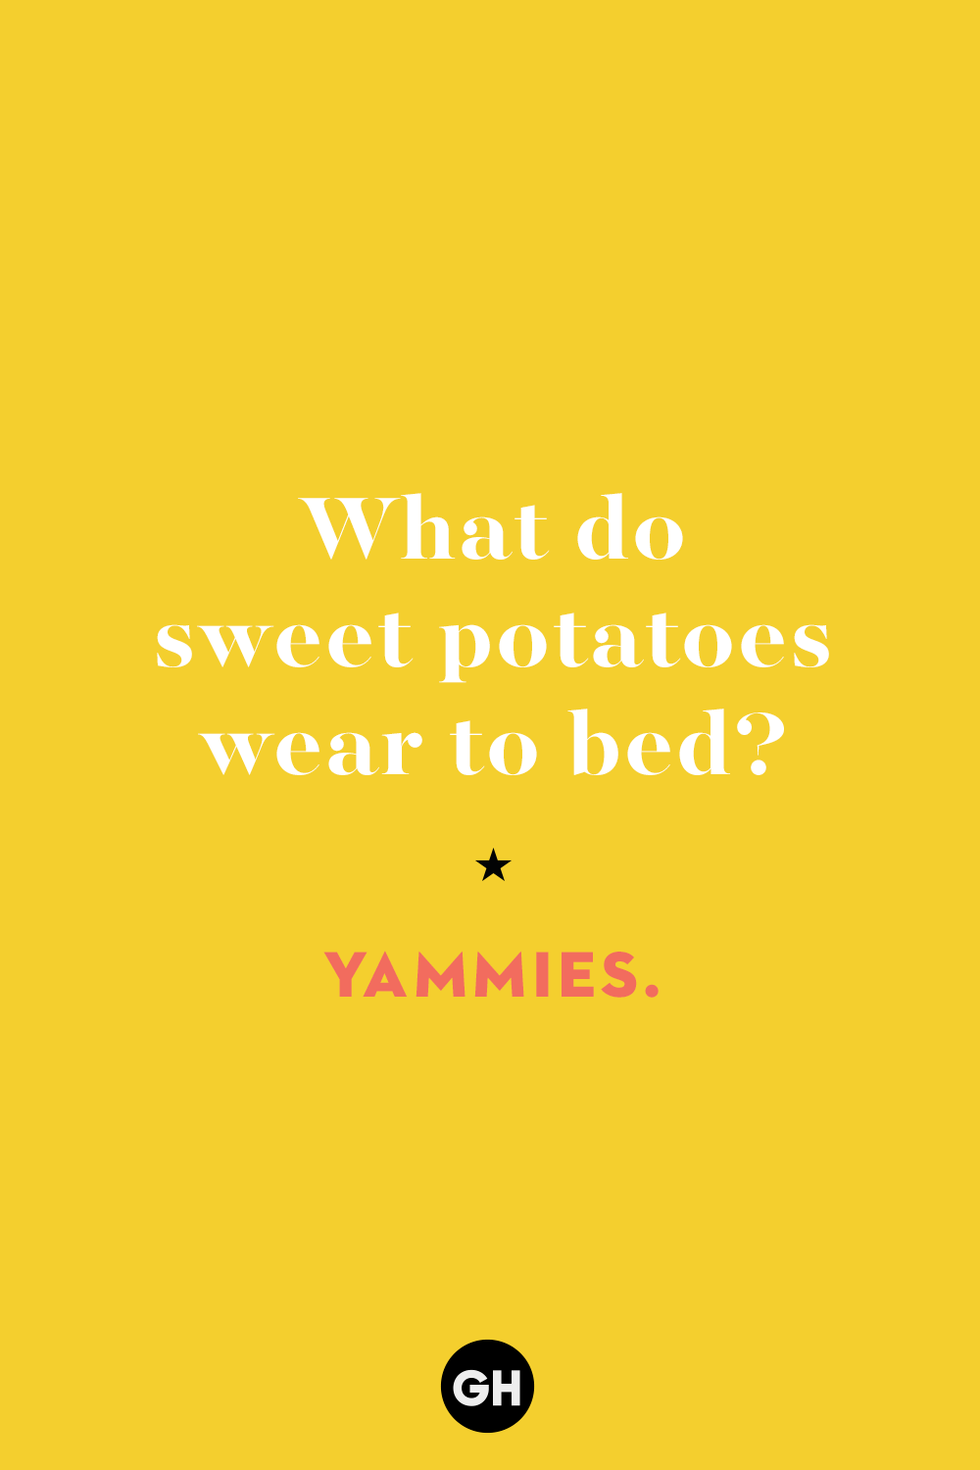 sweet potatoes yammies